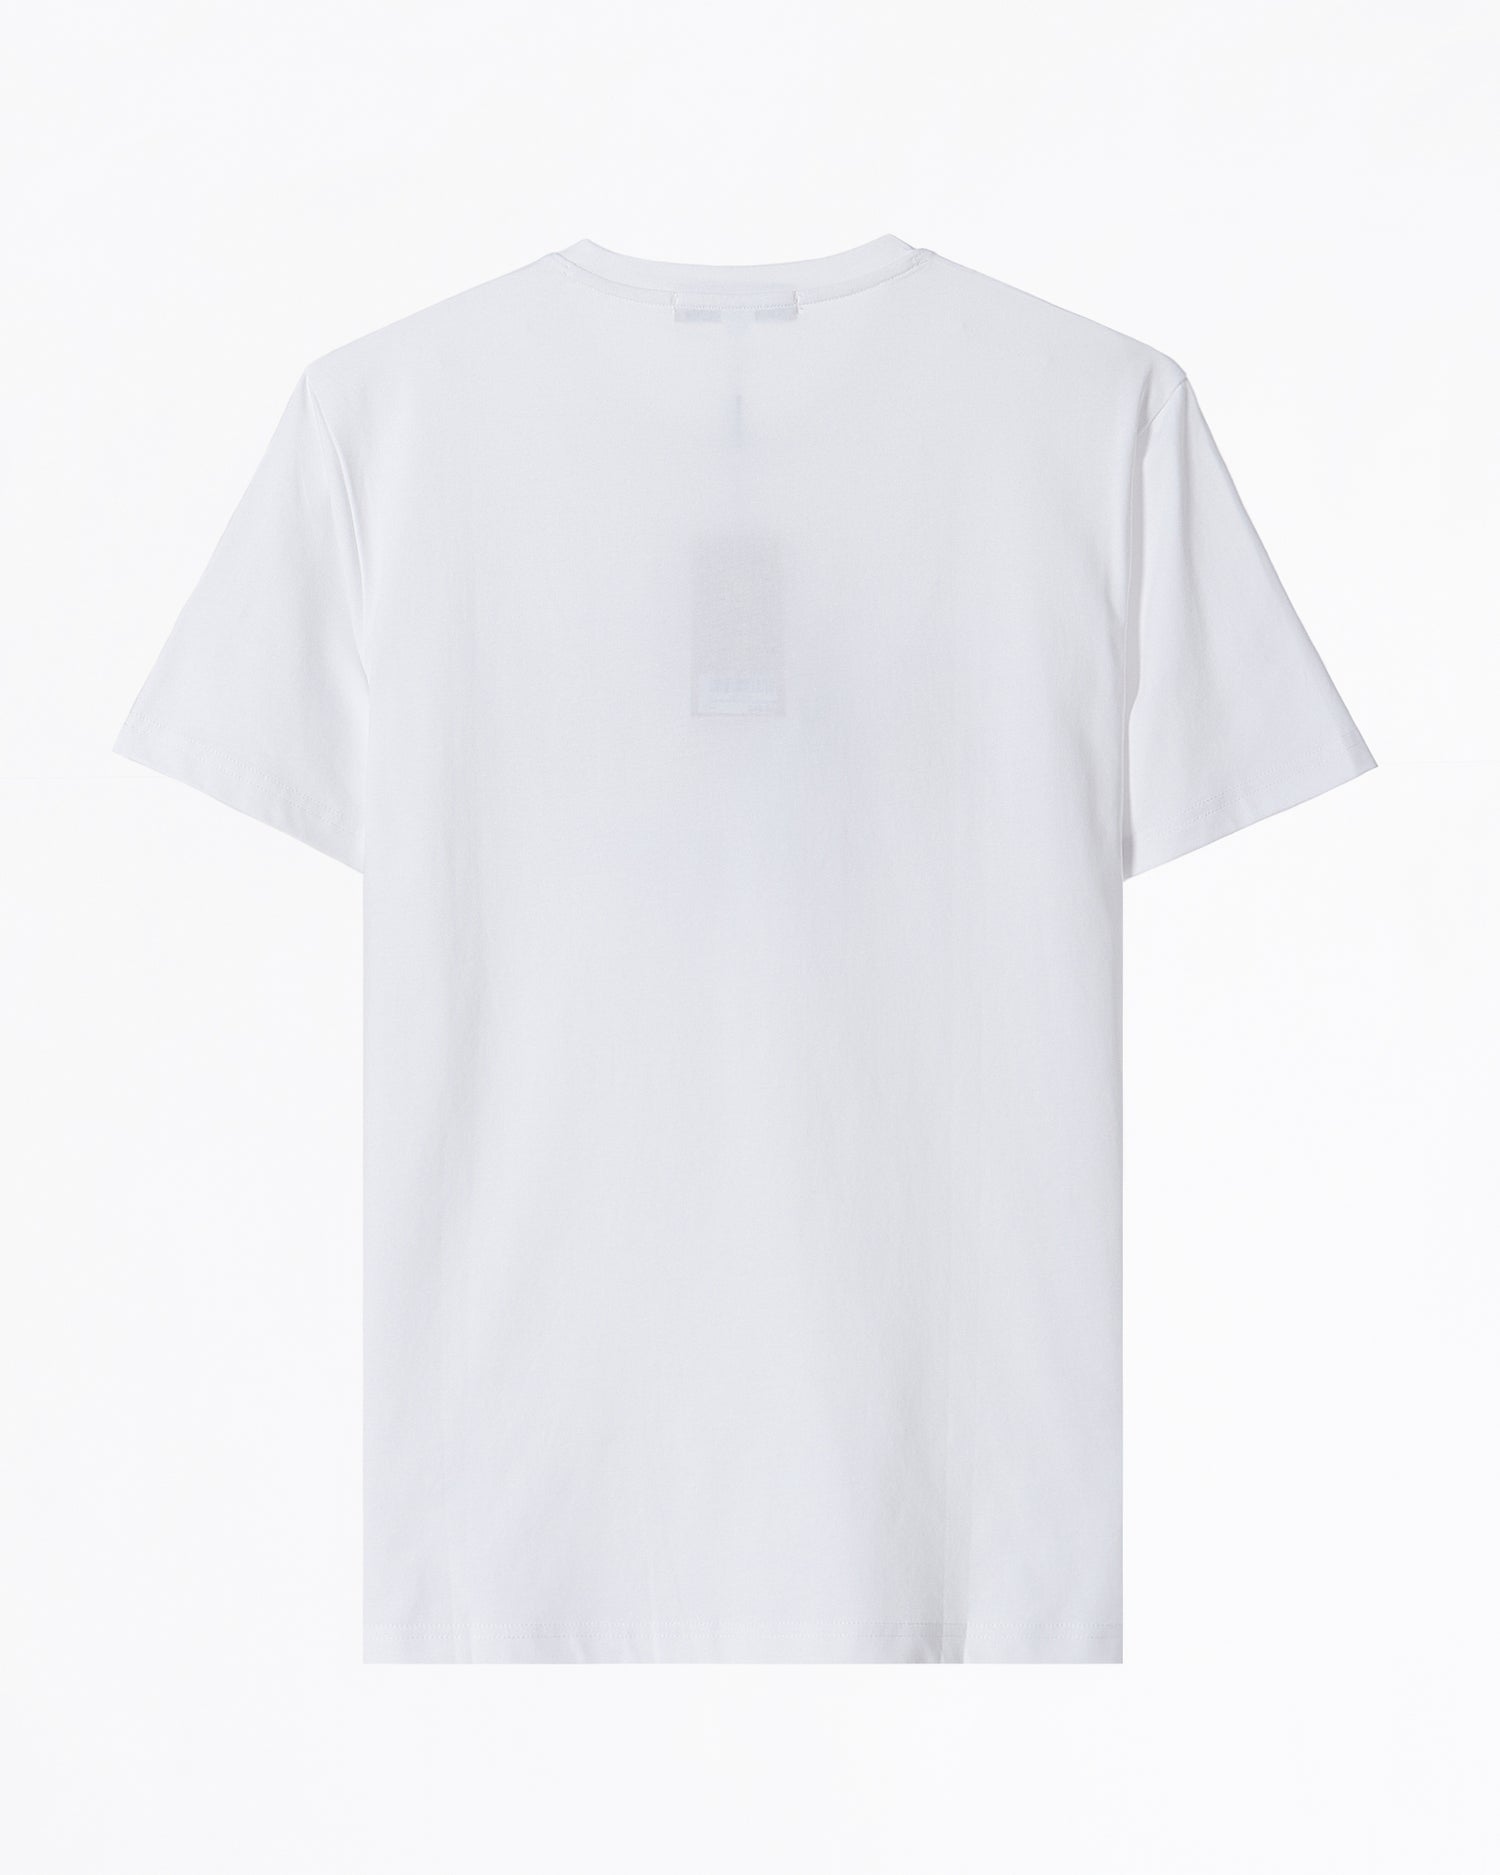 BUR Teddy Bear Printed Men White T-Shirt 49.90